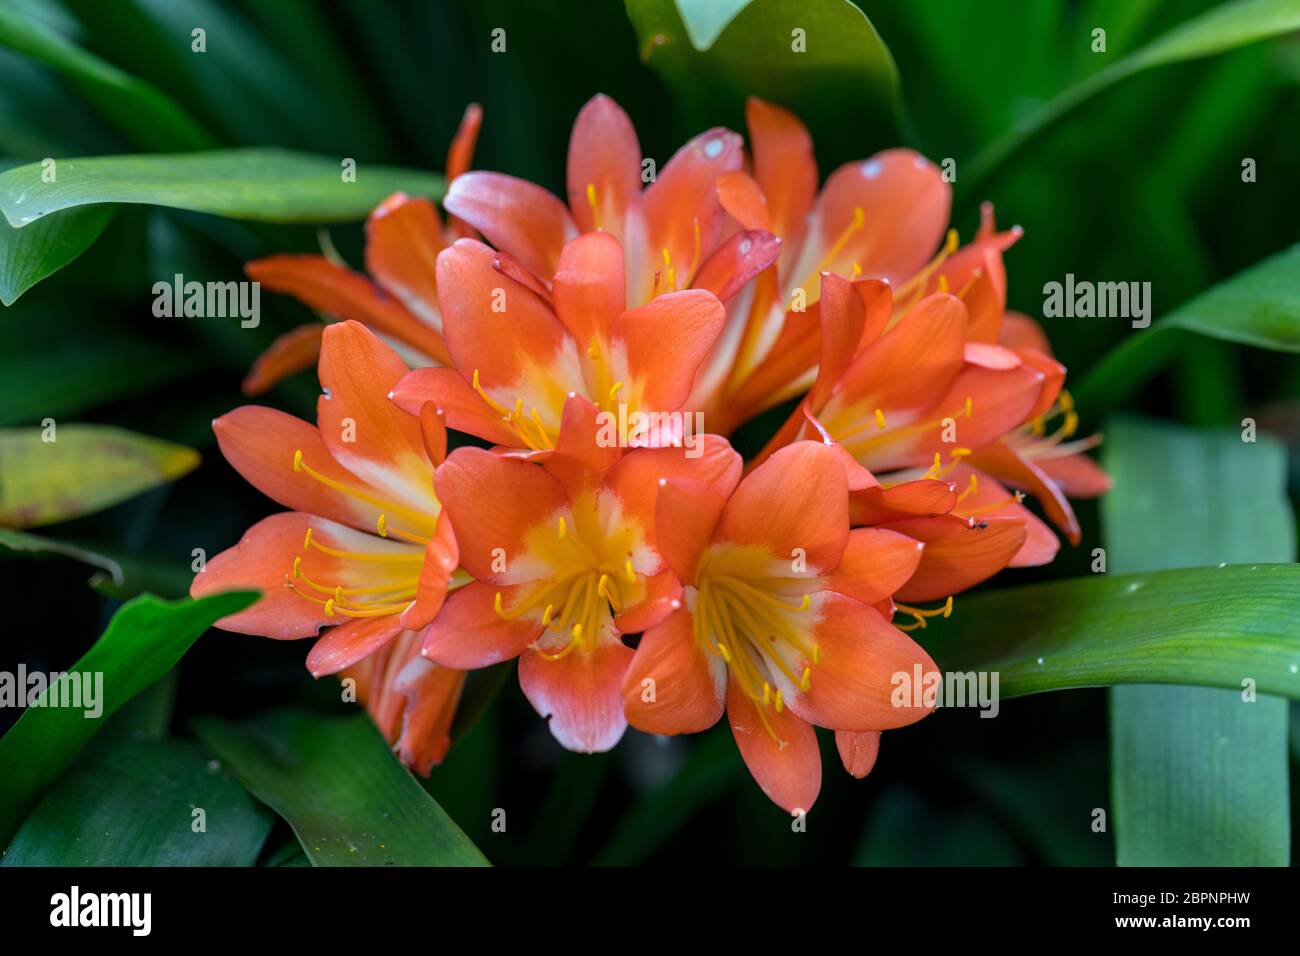 Cluster of orange clivia flowers in garden Stock Photo